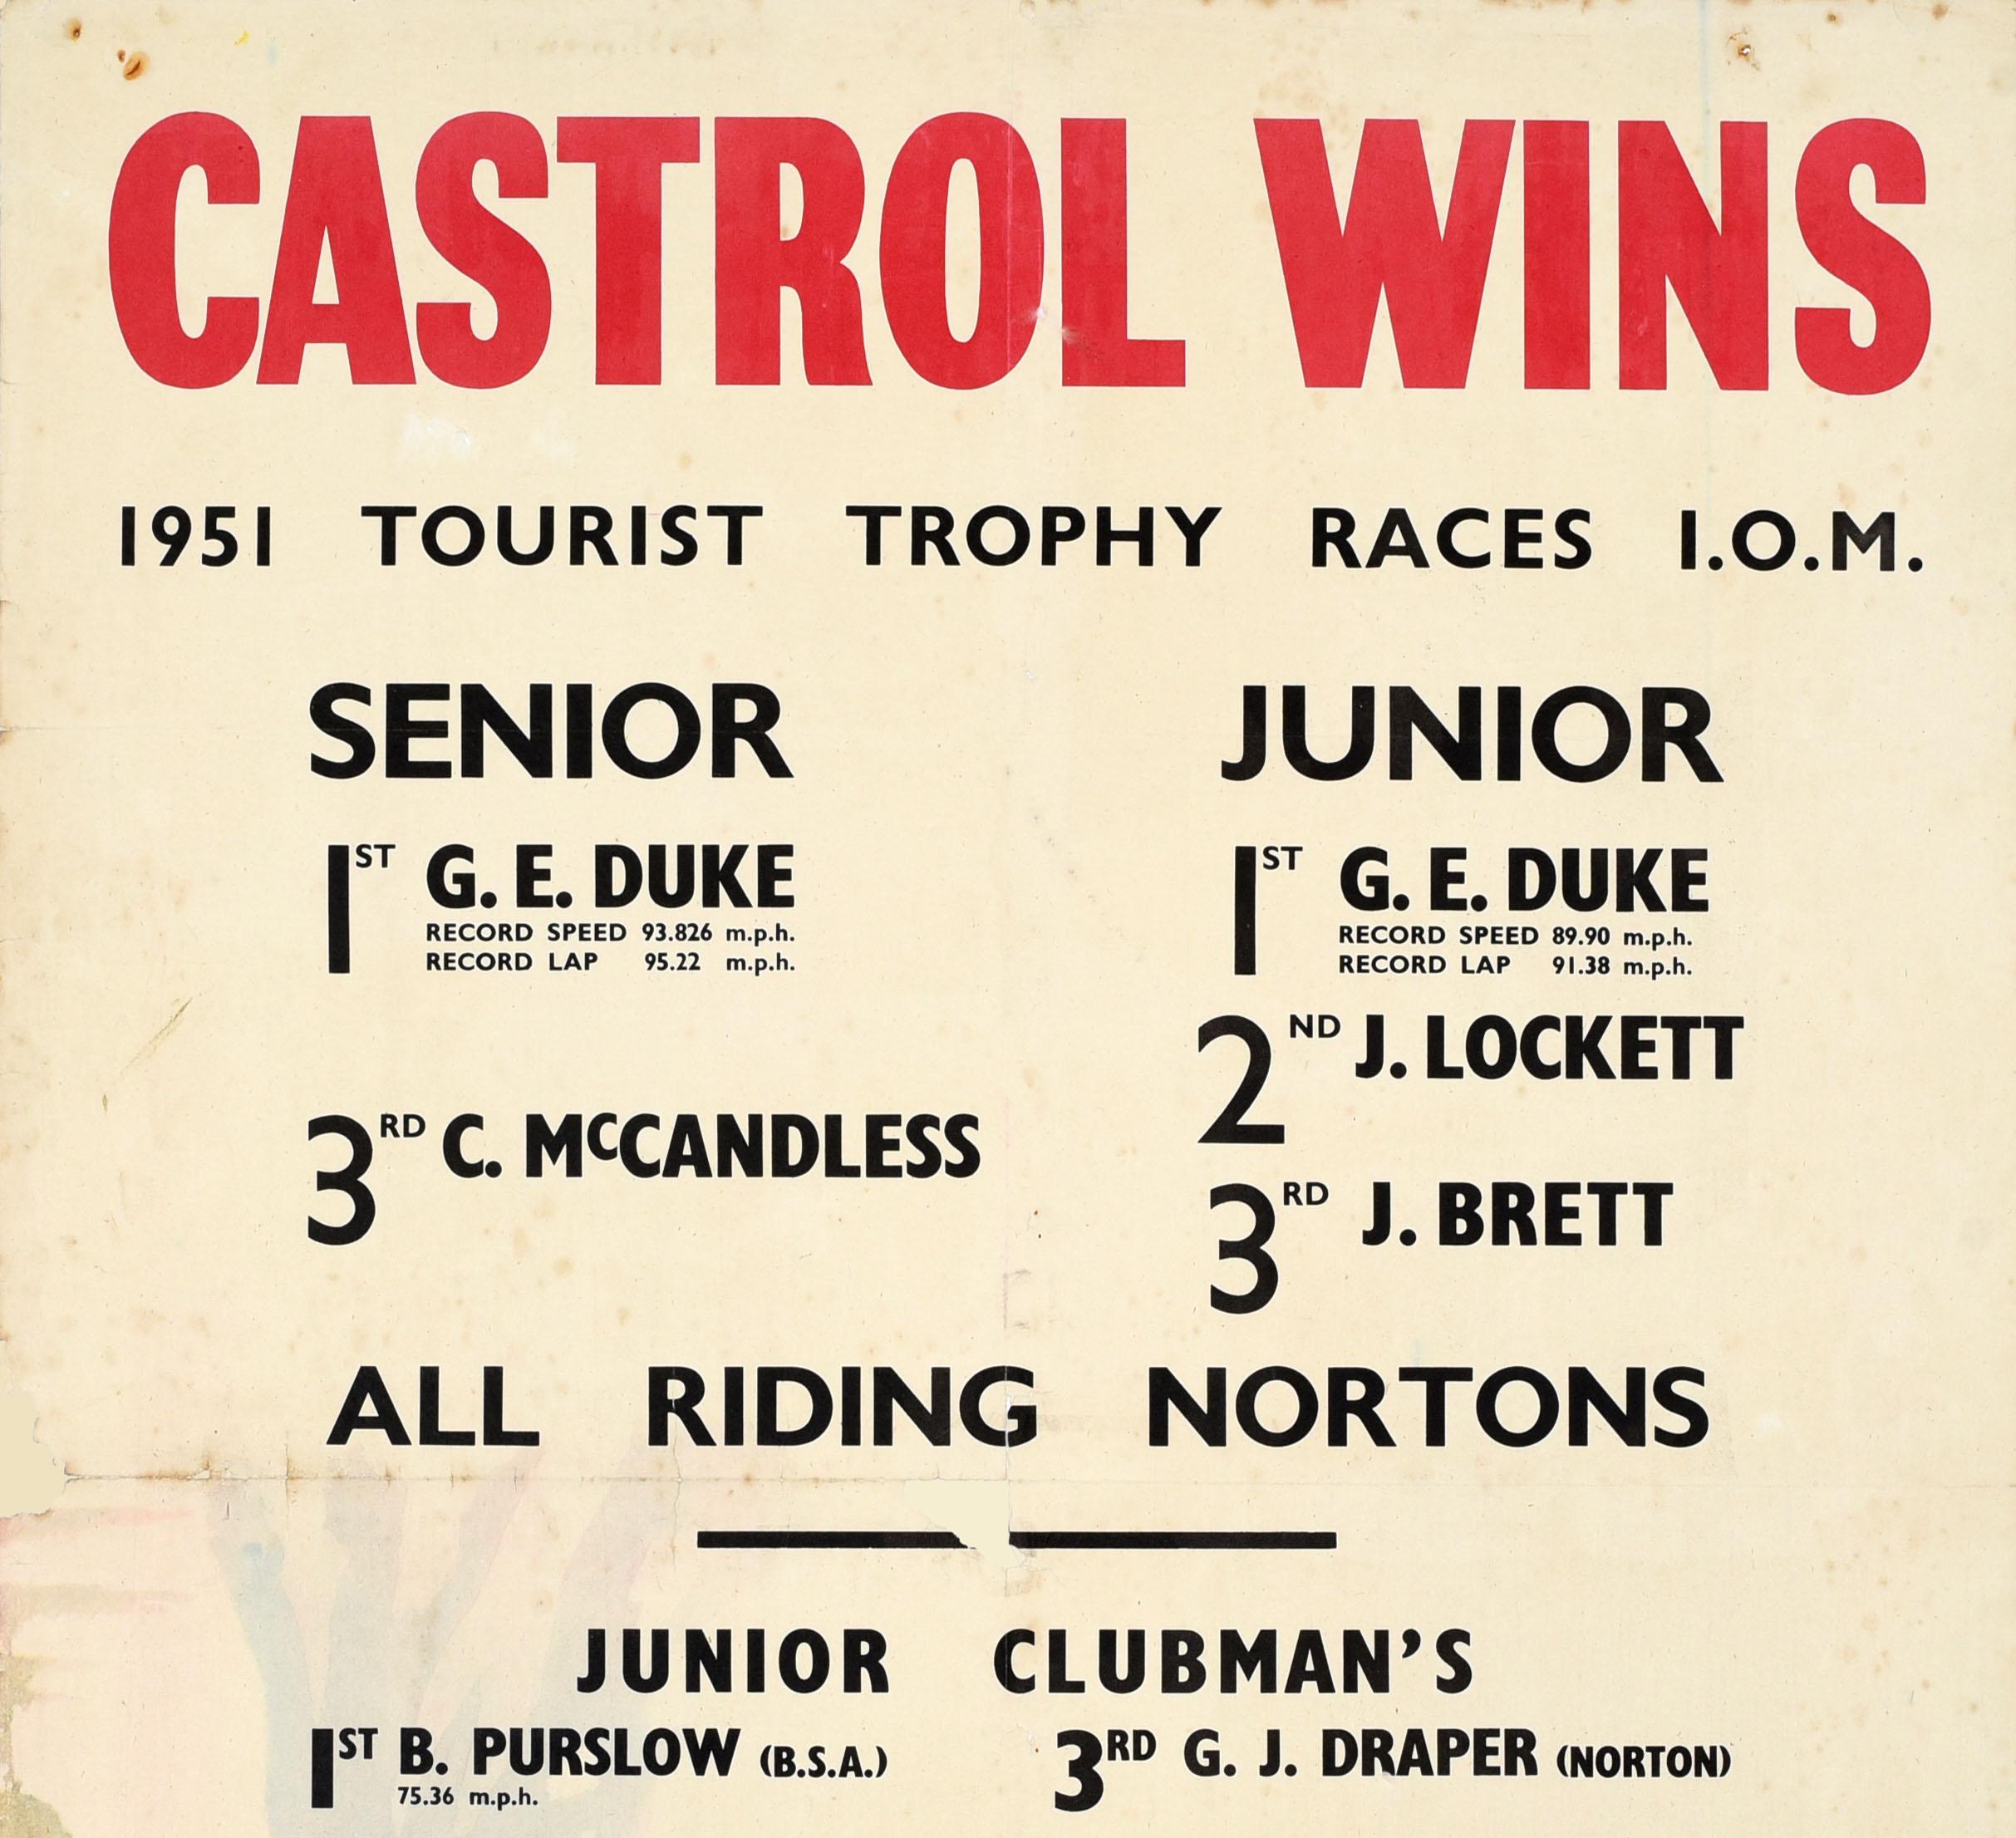 Original vintage poster celebrating the Isle Of Man TT racing achievements using Castrol Motor Oil - Castrol Wins 1951 Tourist Trophy Races I.O.M. Senior 1st G.E. Duke record speed 93.826 mph record lap 95.22 mph 3rd C. McCandless Junior 1st G.E.